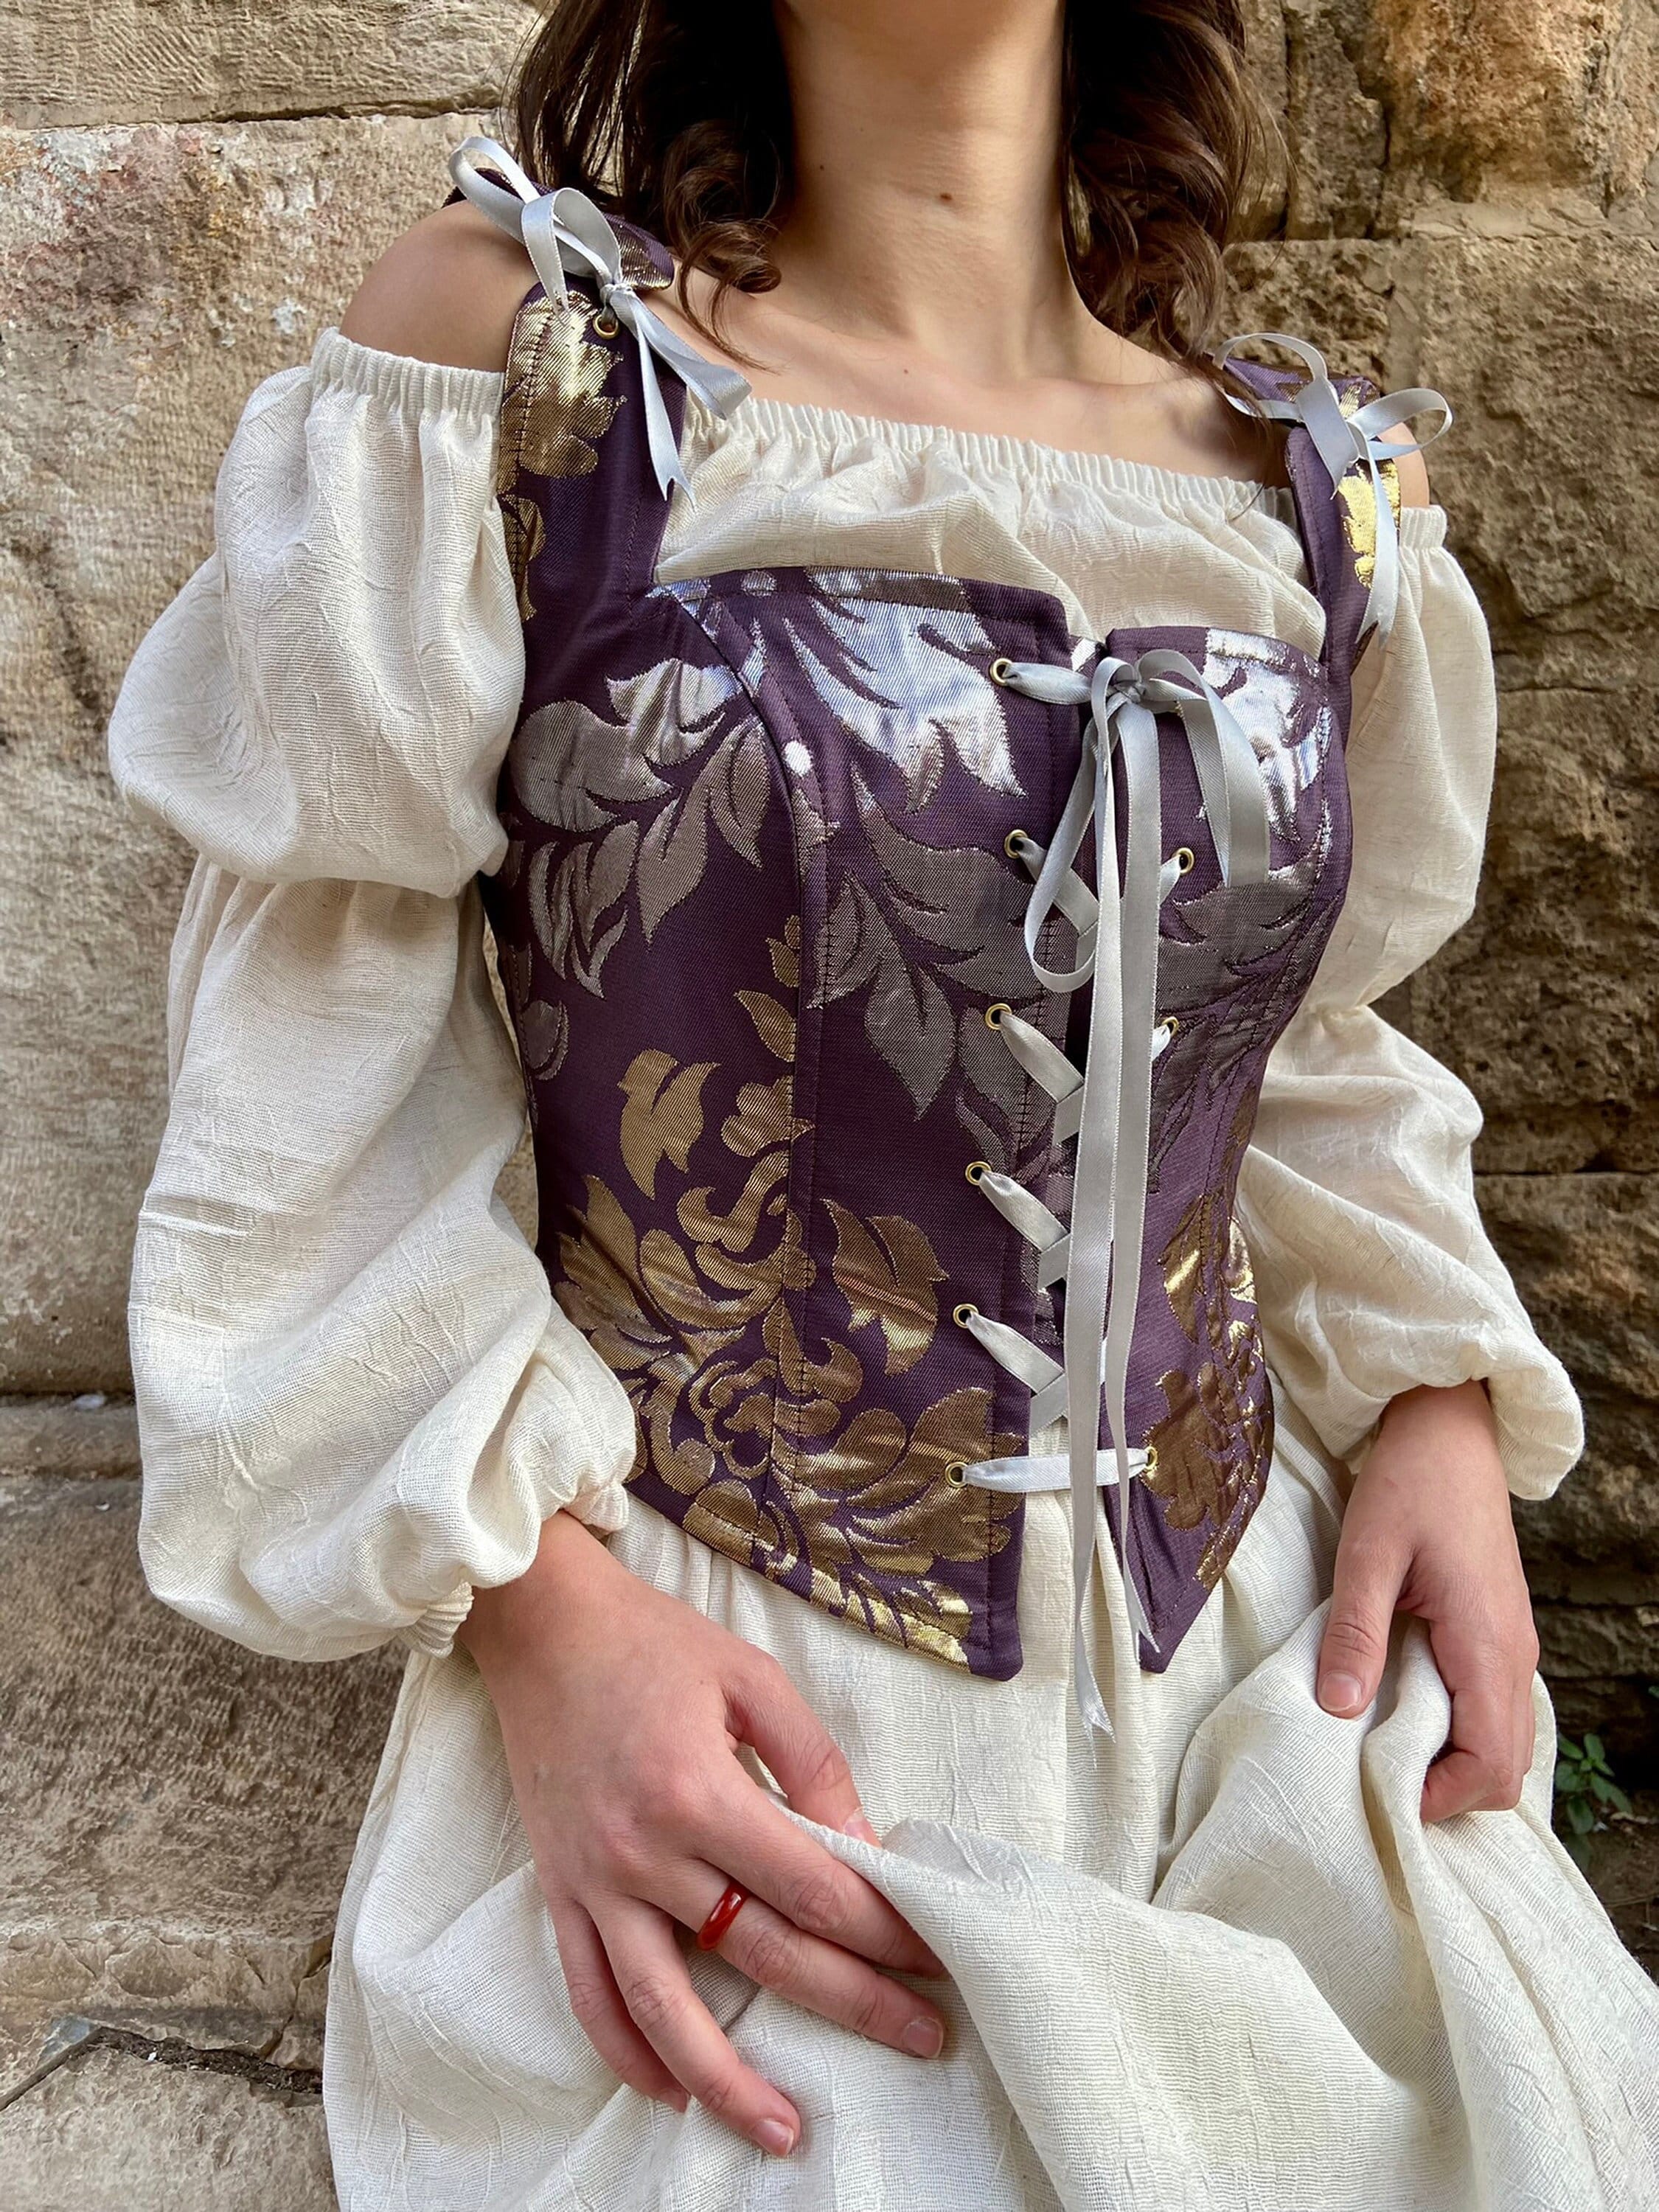 Renaissance Corset Bodice Stays in Purple Silver and Gold, Ren Fair Corset  Stays, Handmade Corset, Medieval Corset, Costume Halloween 